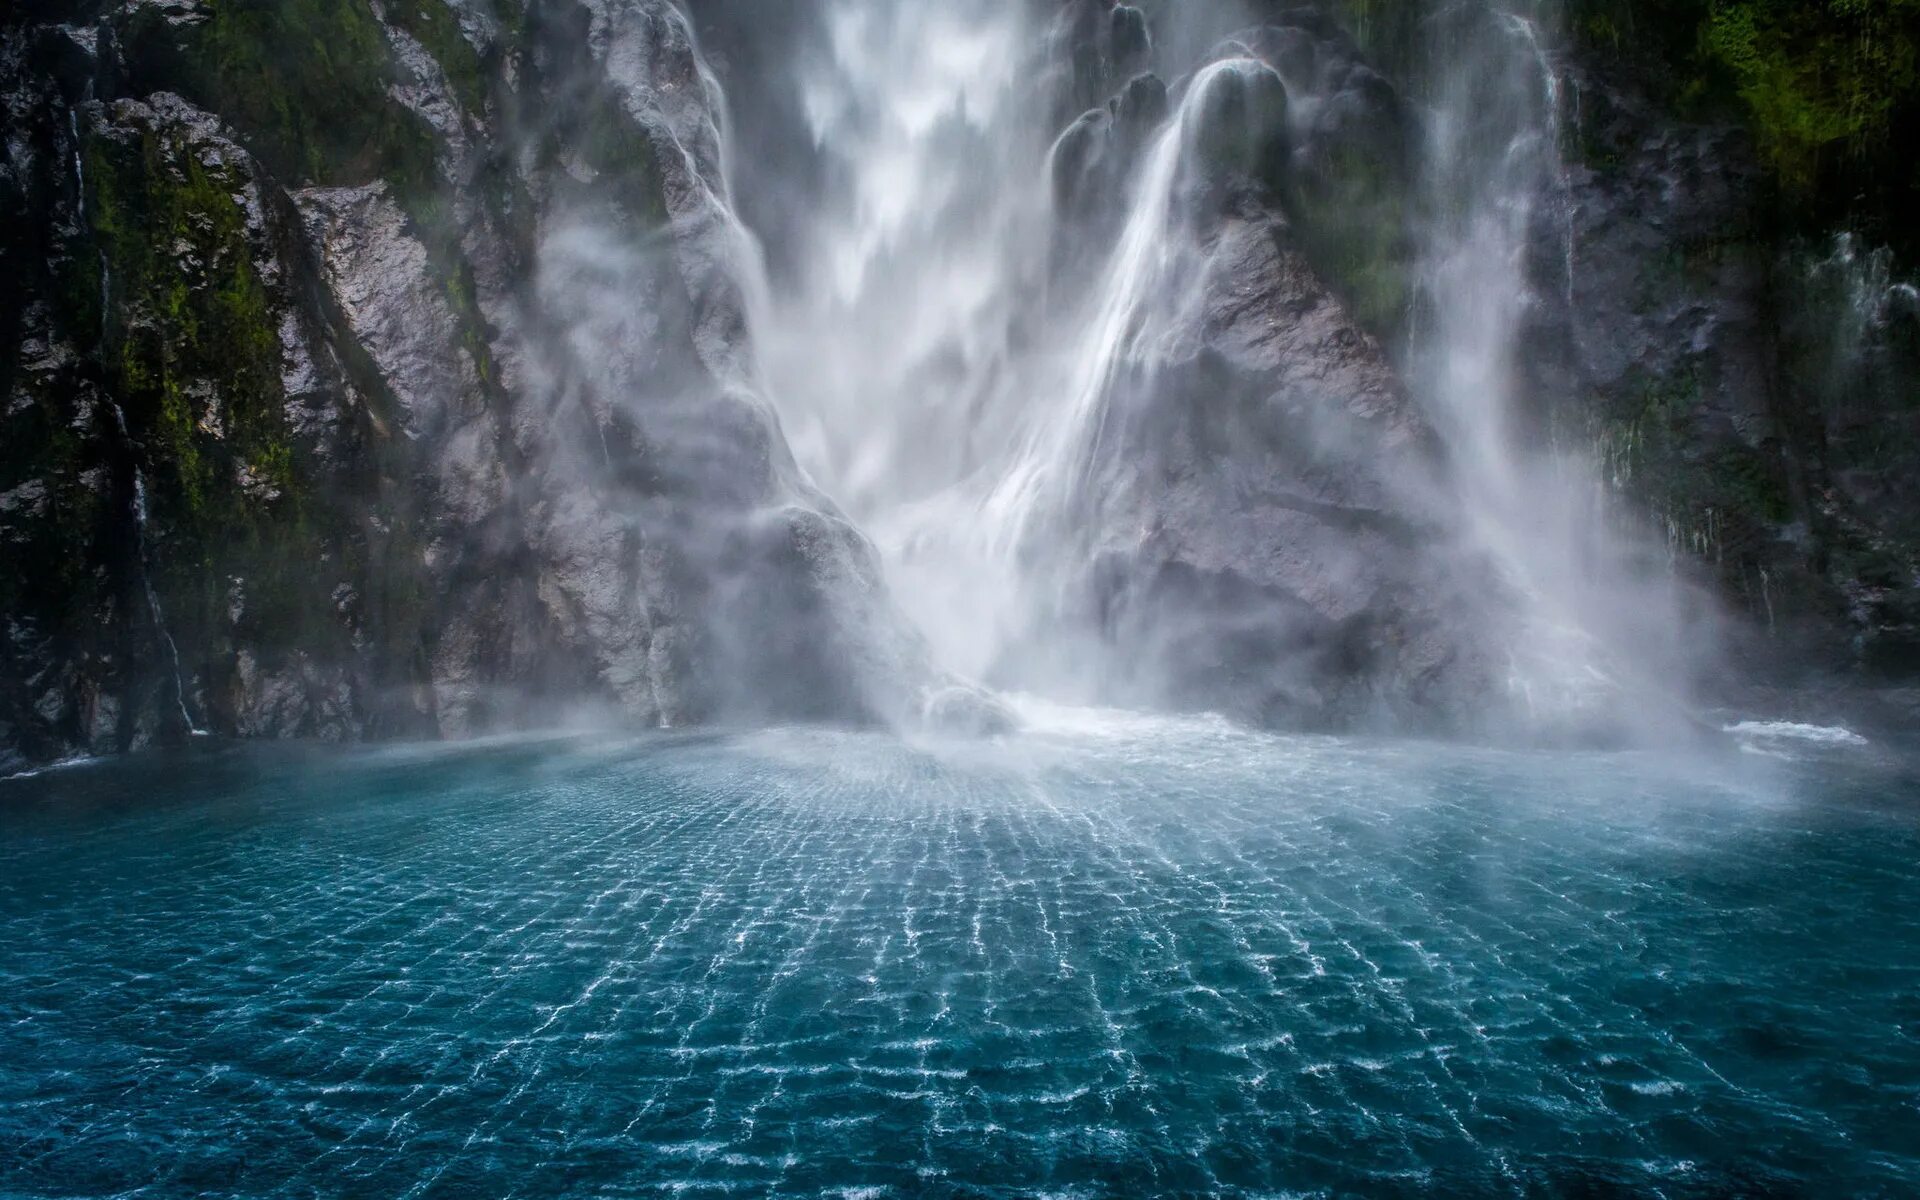 Красивые картинки на телефон. Водопад « голубая Лагуна» ( г.холм). Милфорд саунд обратные водопады. Водопад Фэнго. Водопад Нгалиема.